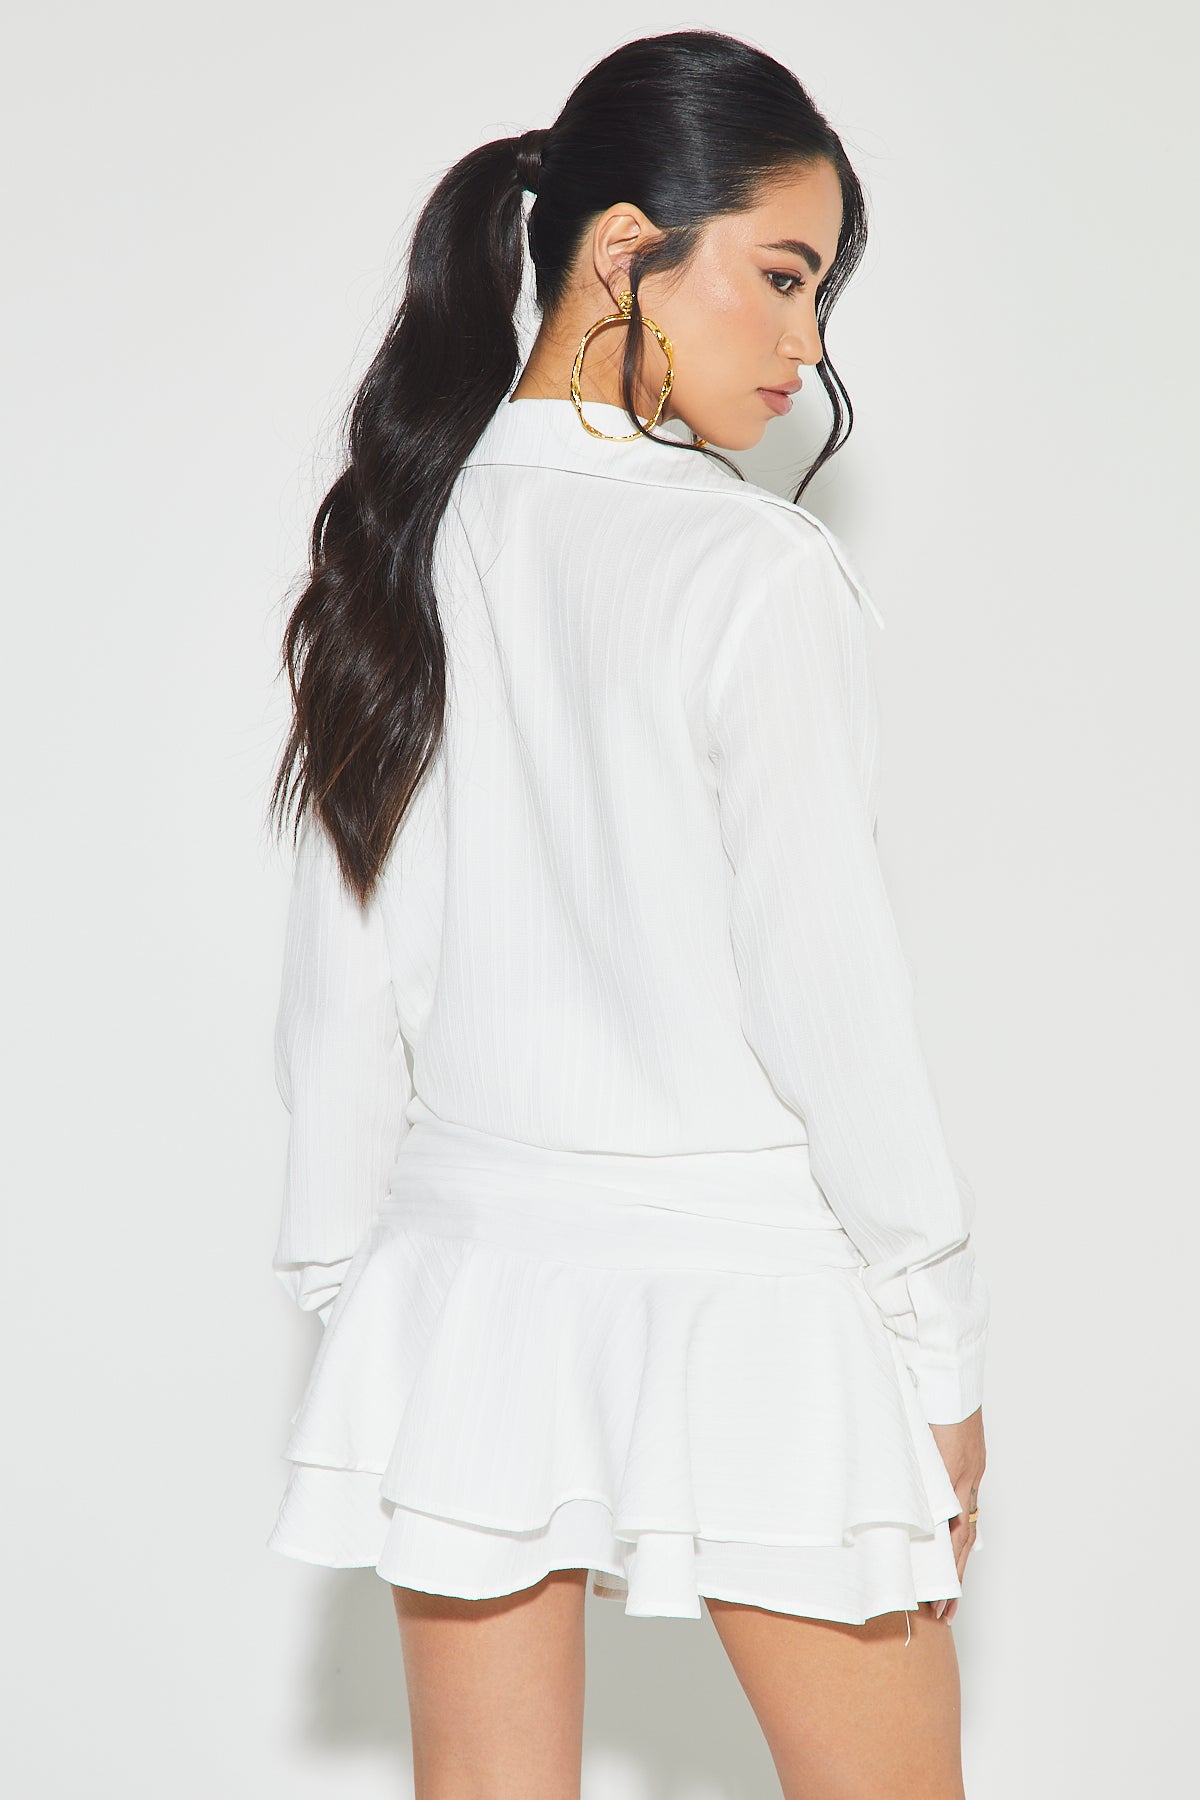 ALELI White Textured Ruffle Mini Dress